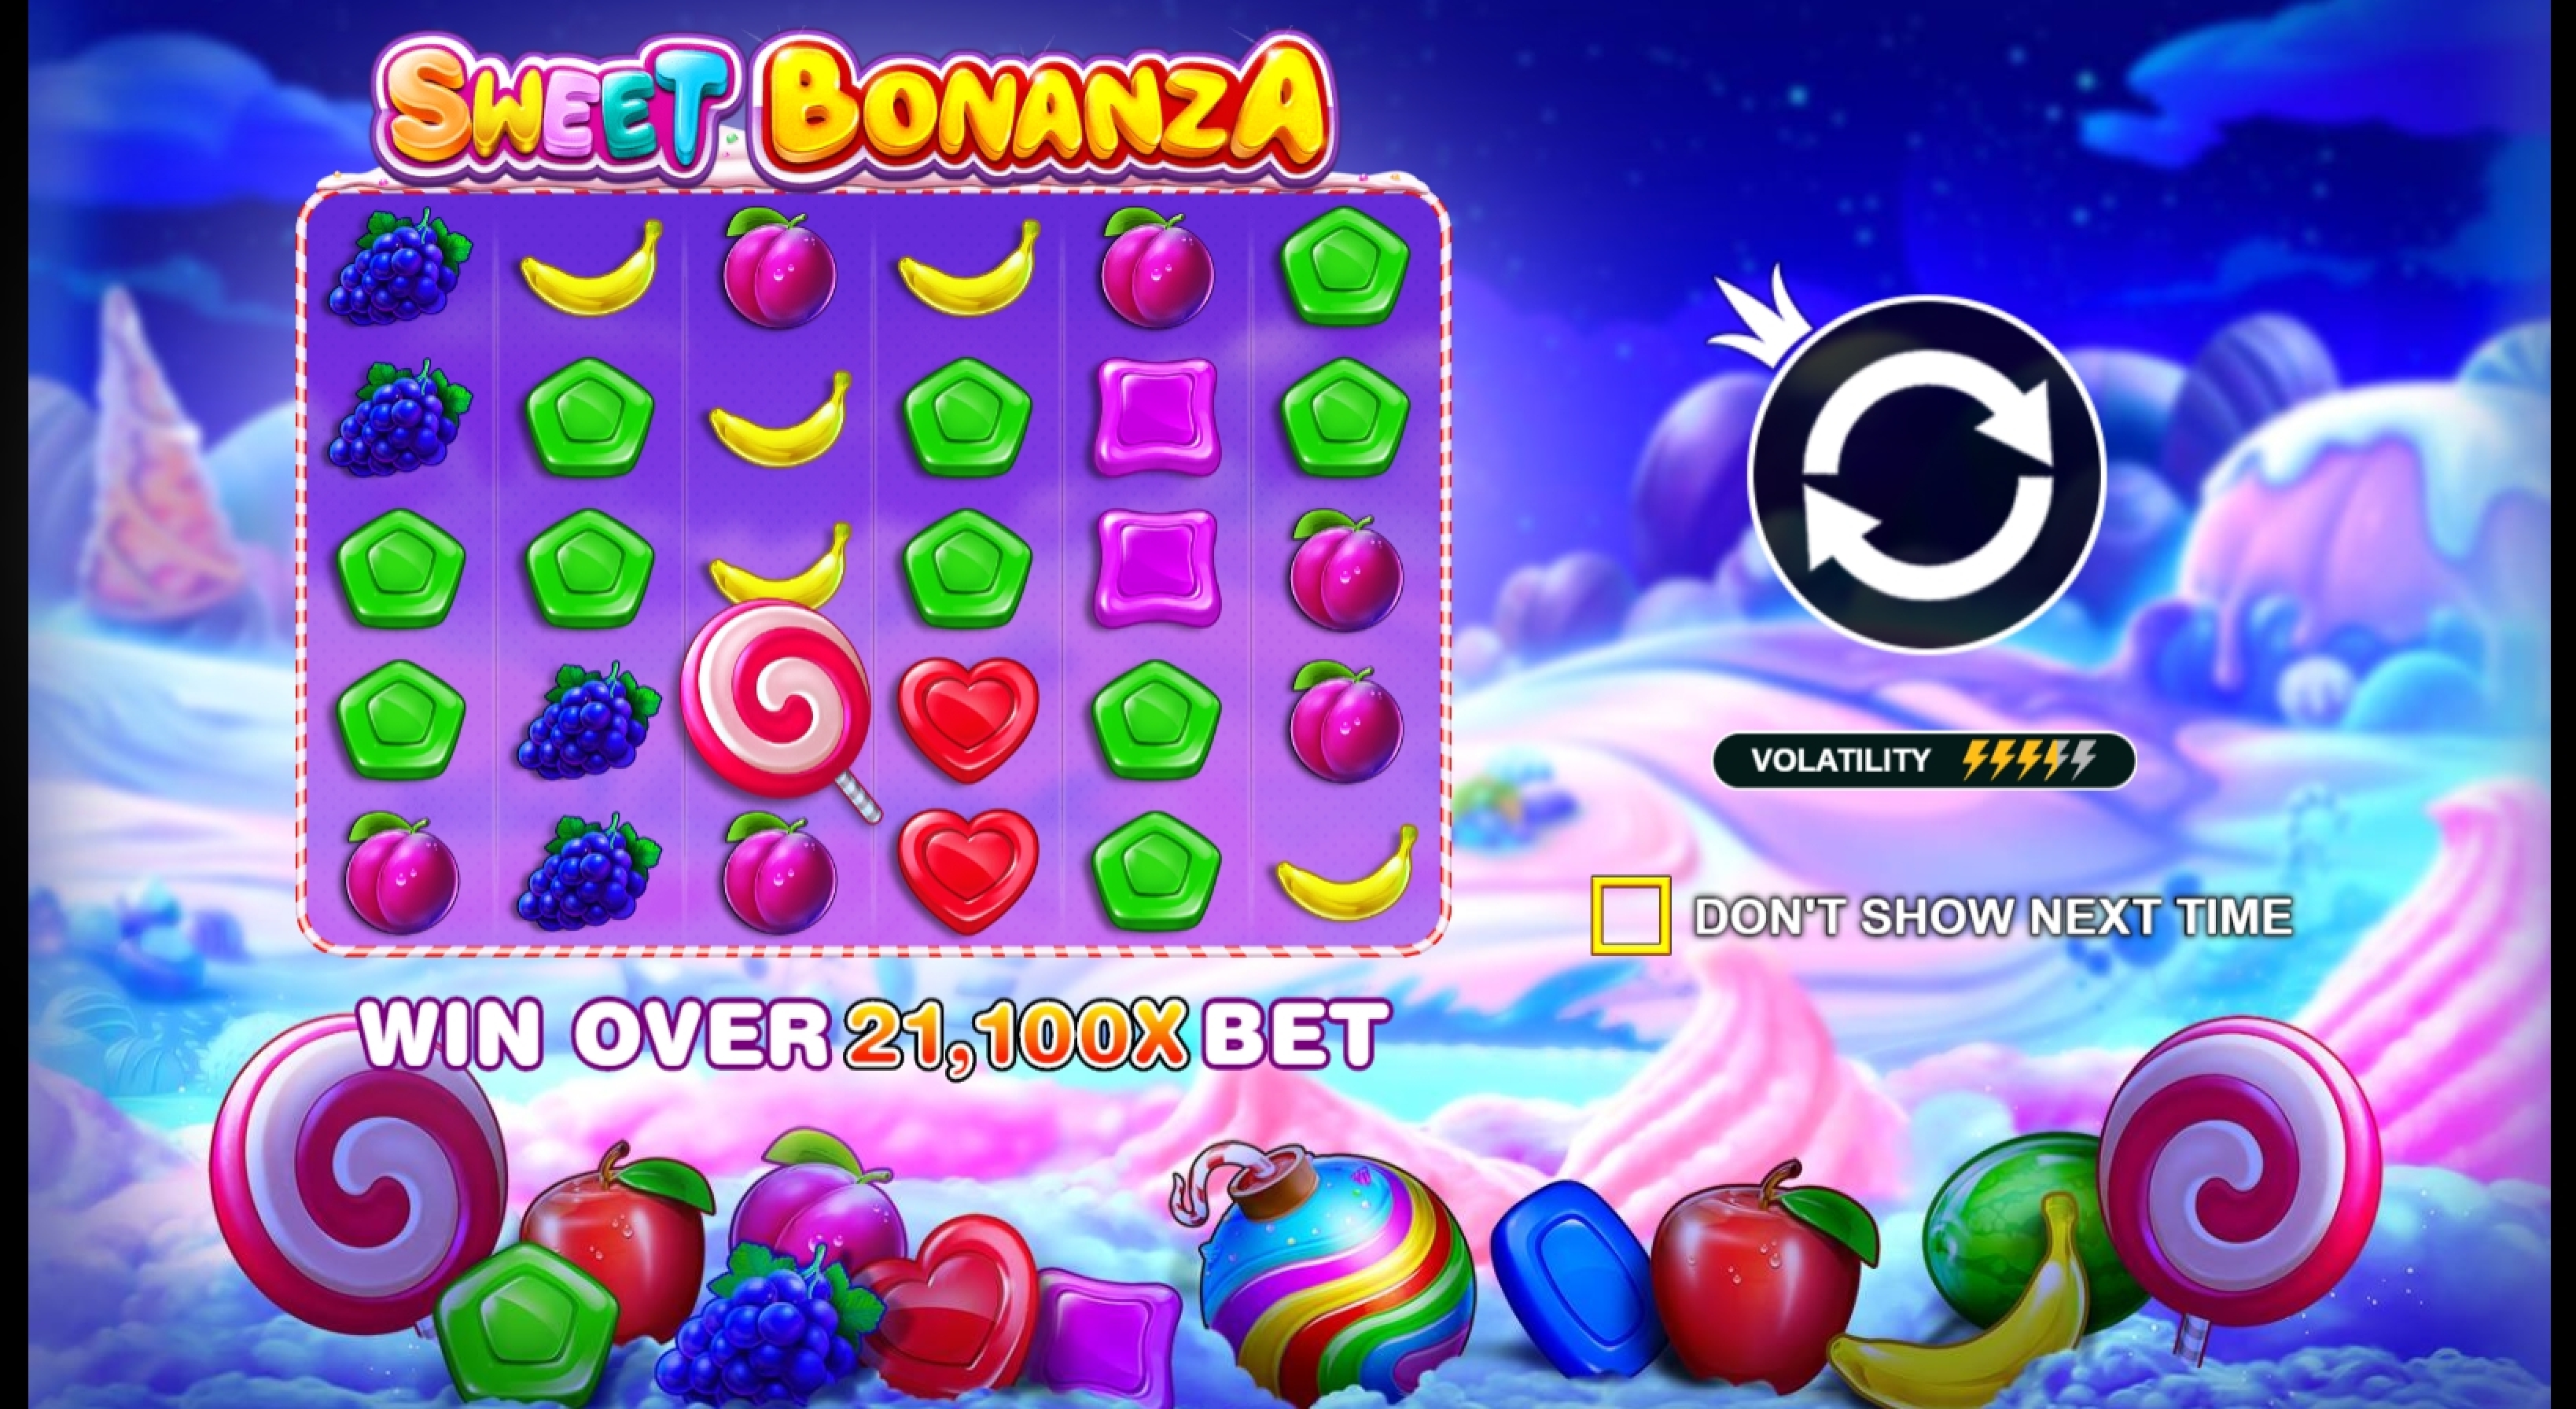 Play Sweet Bonanza Free Casino Slot Game by Pragmatic Play